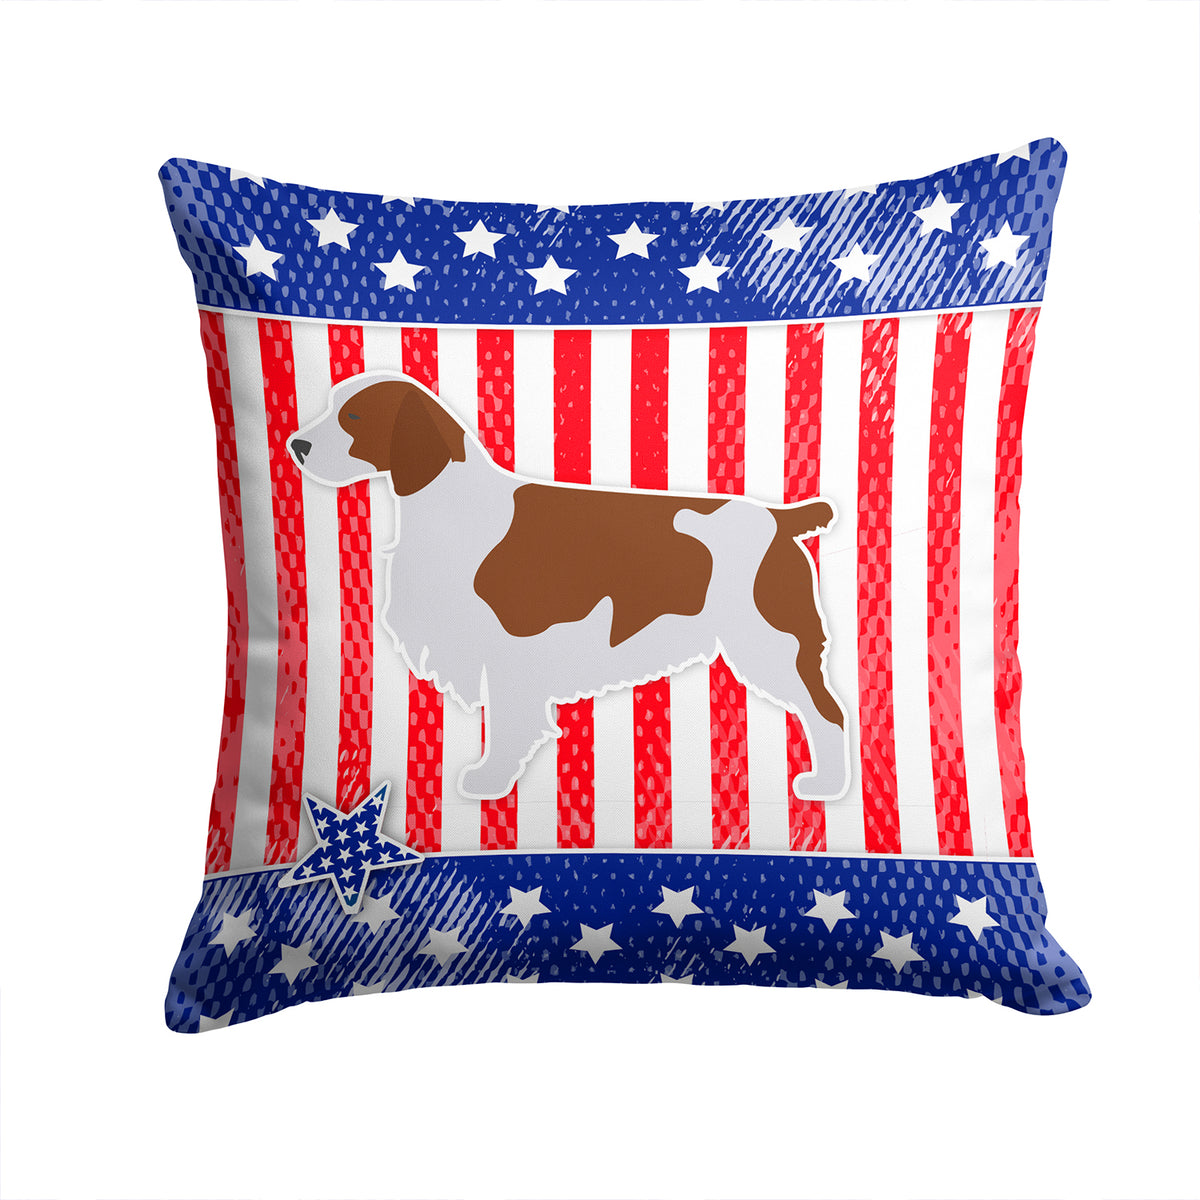 USA Patriotic Welsh Springer Spaniel Fabric Decorative Pillow BB3300PW1414 - the-store.com